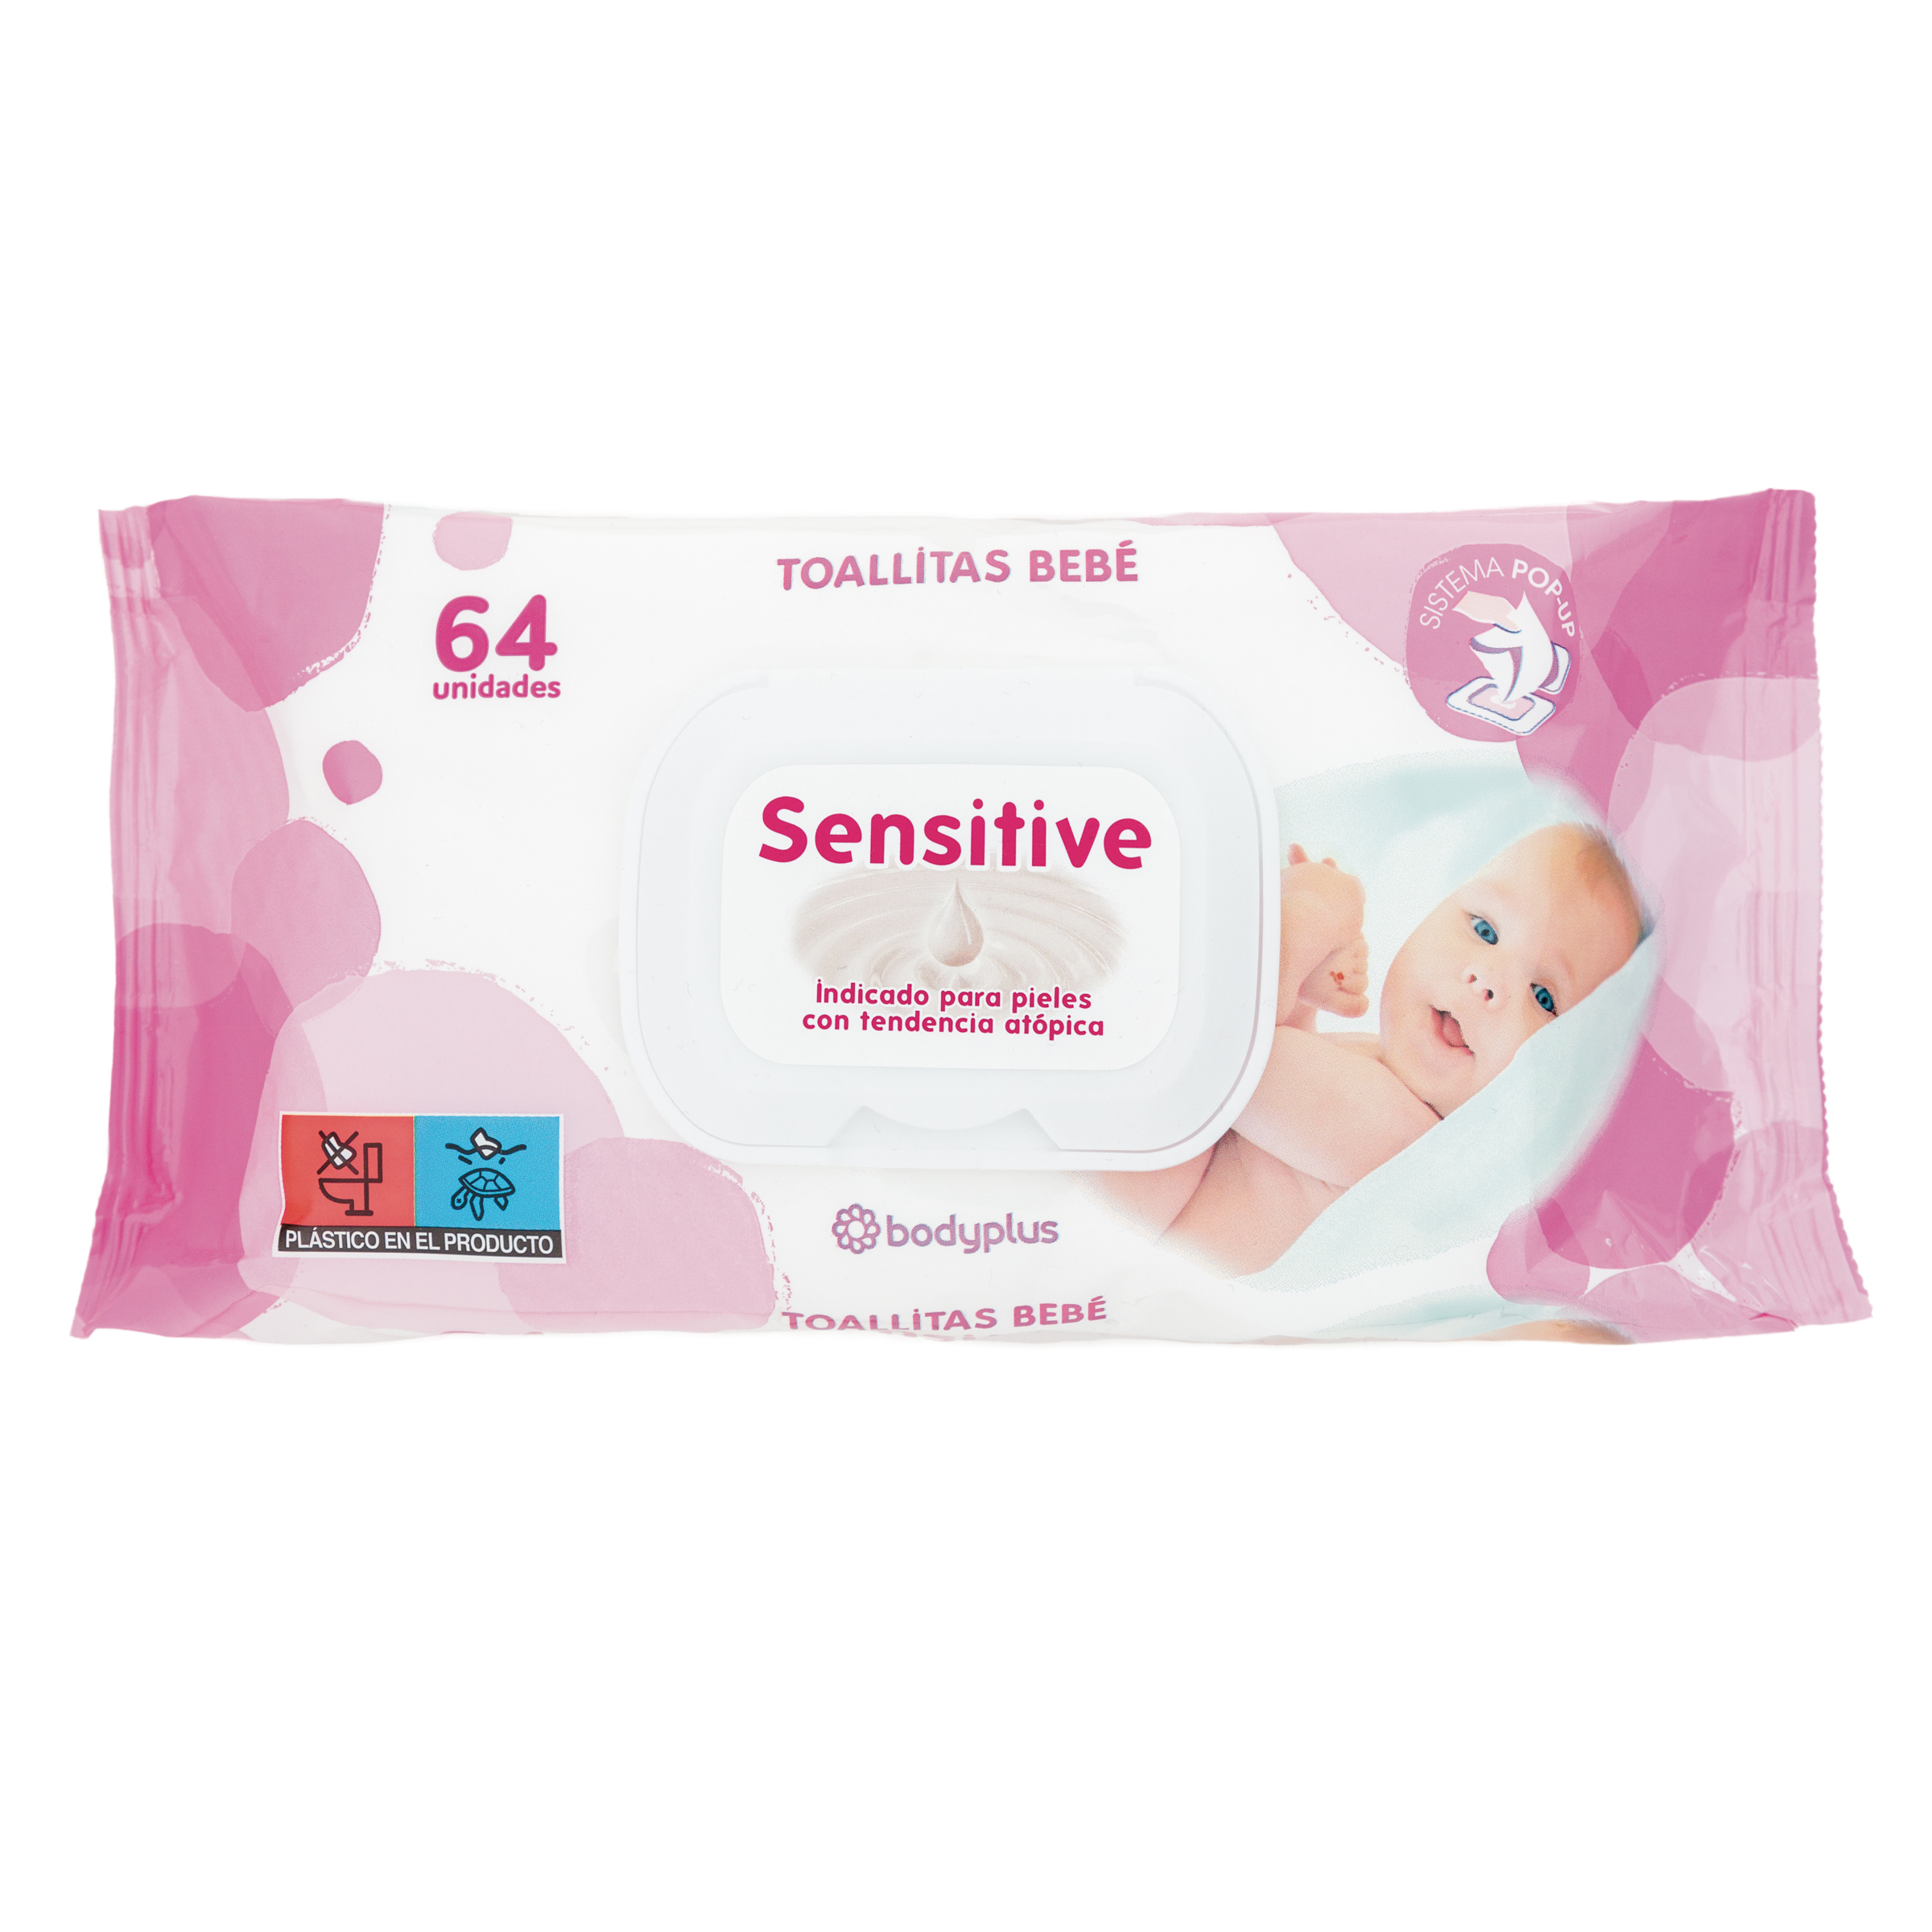 Toallitas bebé Bodyplus 64 uds sensitive indicado para pieles